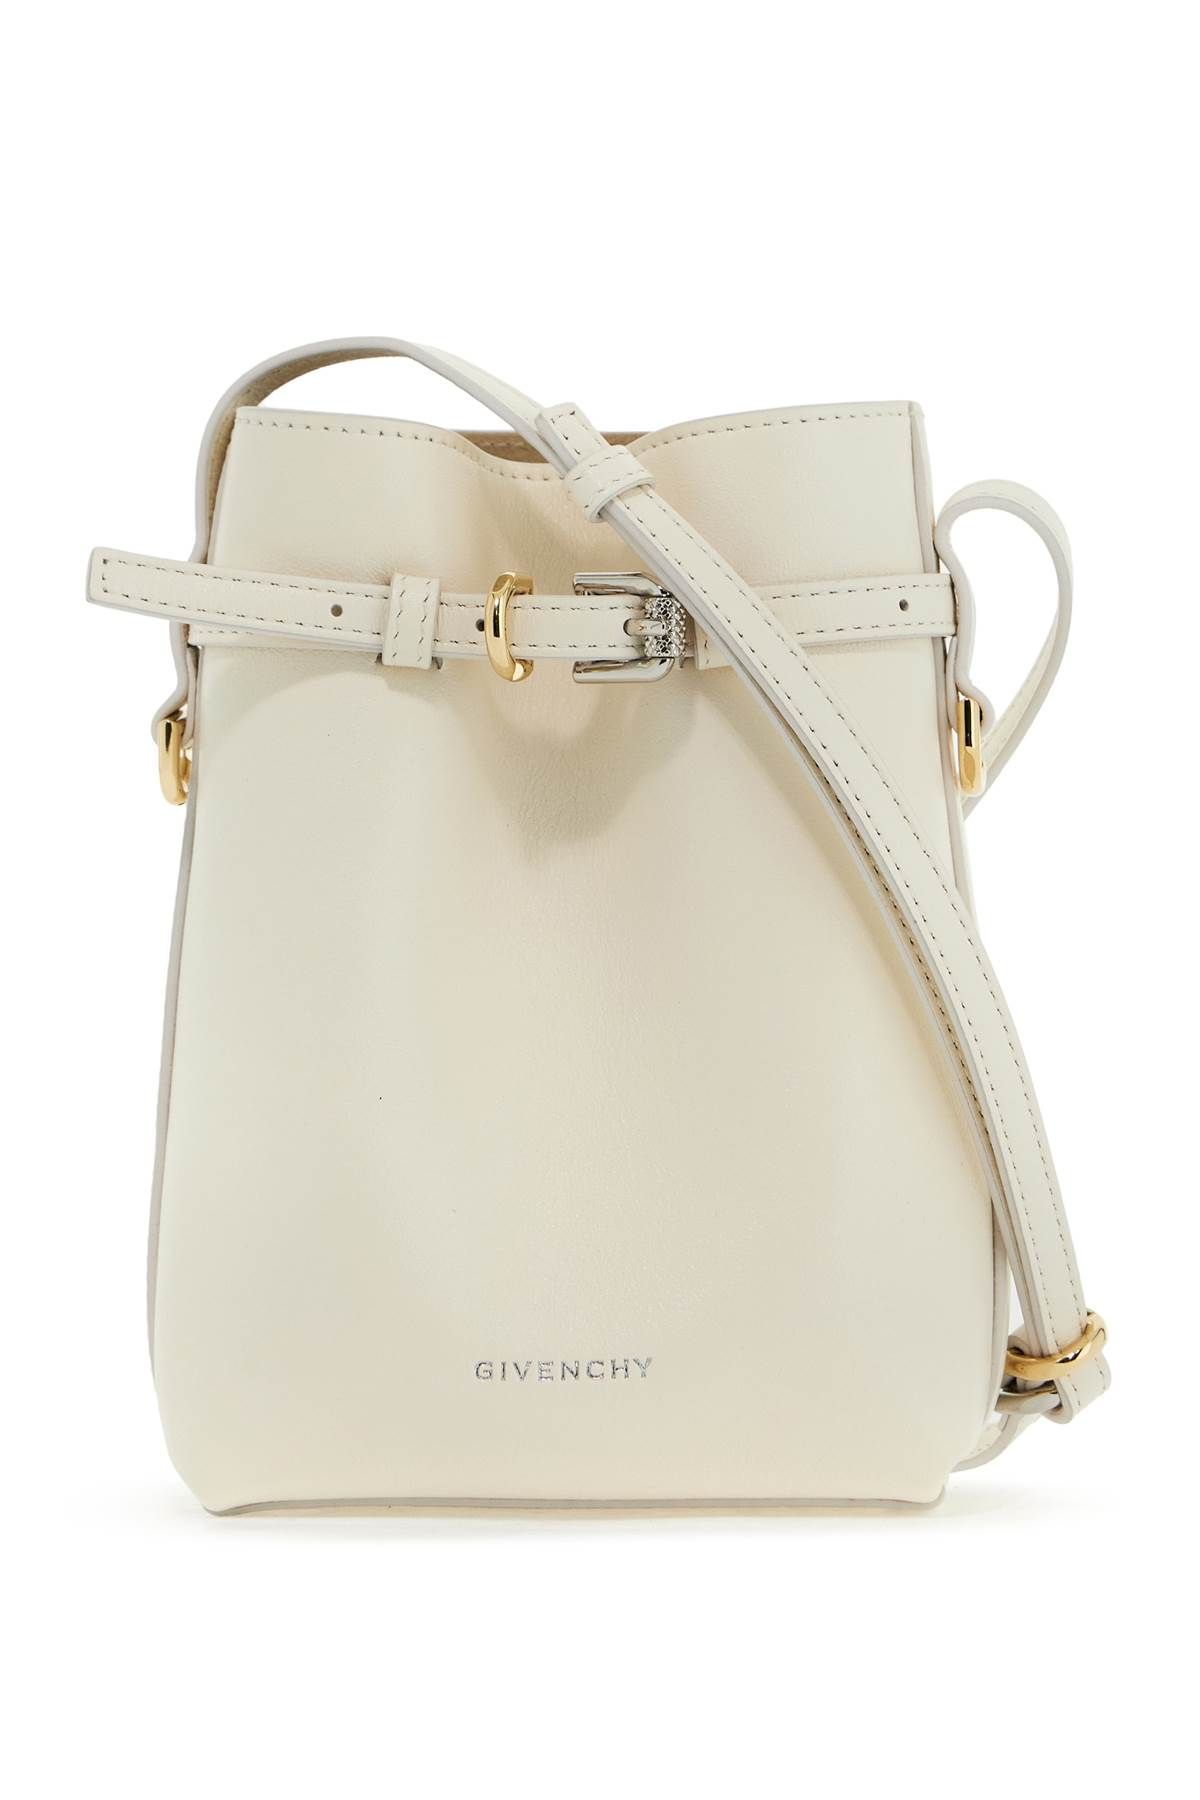 Givenchy GIVENCHY "voyou mini shoulder bag